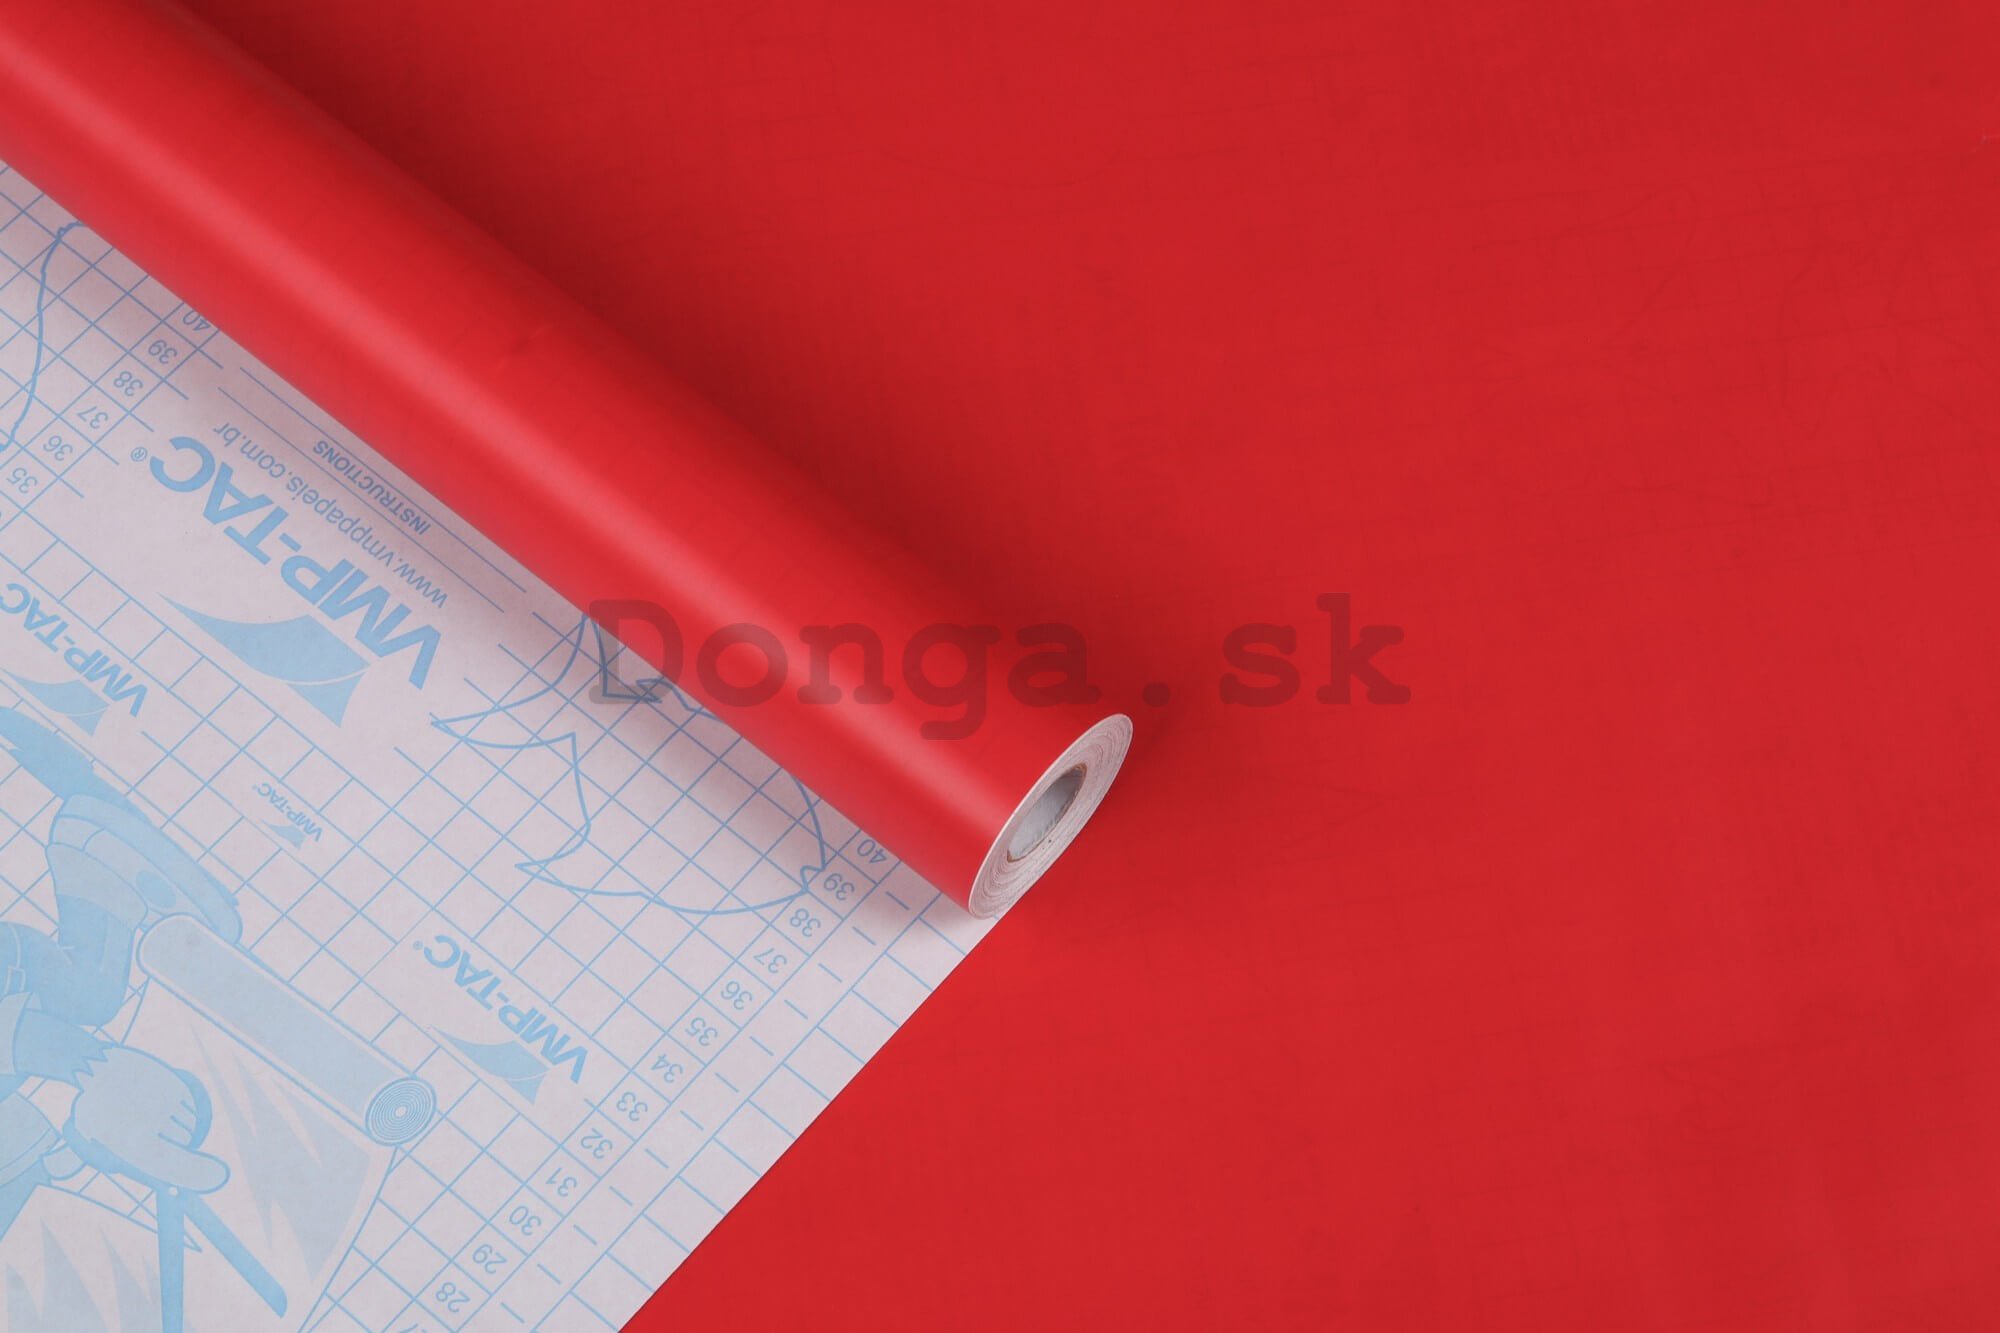 Samolepiace tapety na nábytok červená 45 cm x 8 m